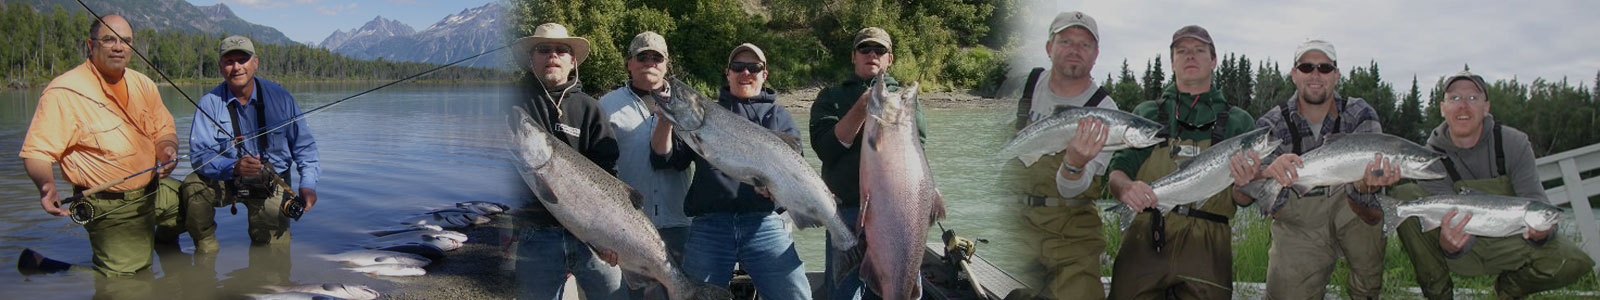 Alaska Salmon Fishing Trips